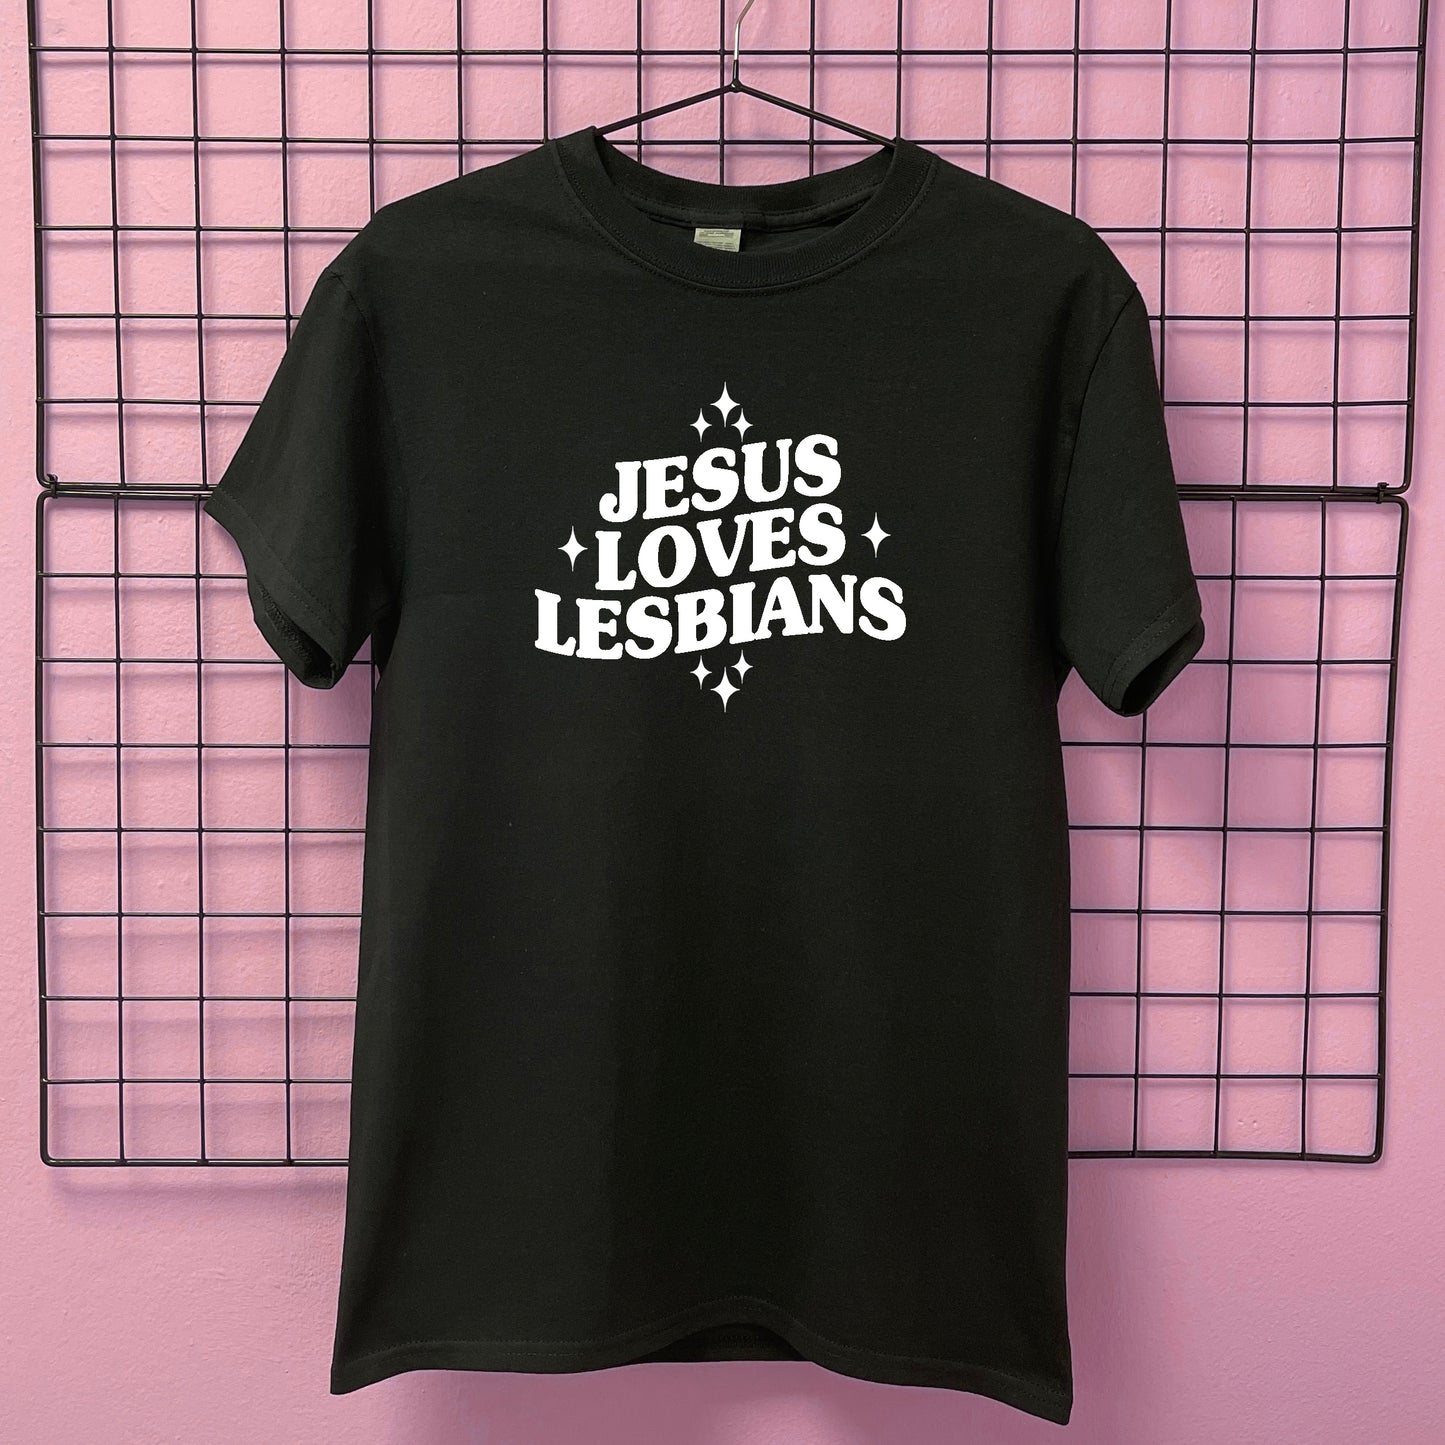 JESUS LOVES LESBIANS T-SHIRT